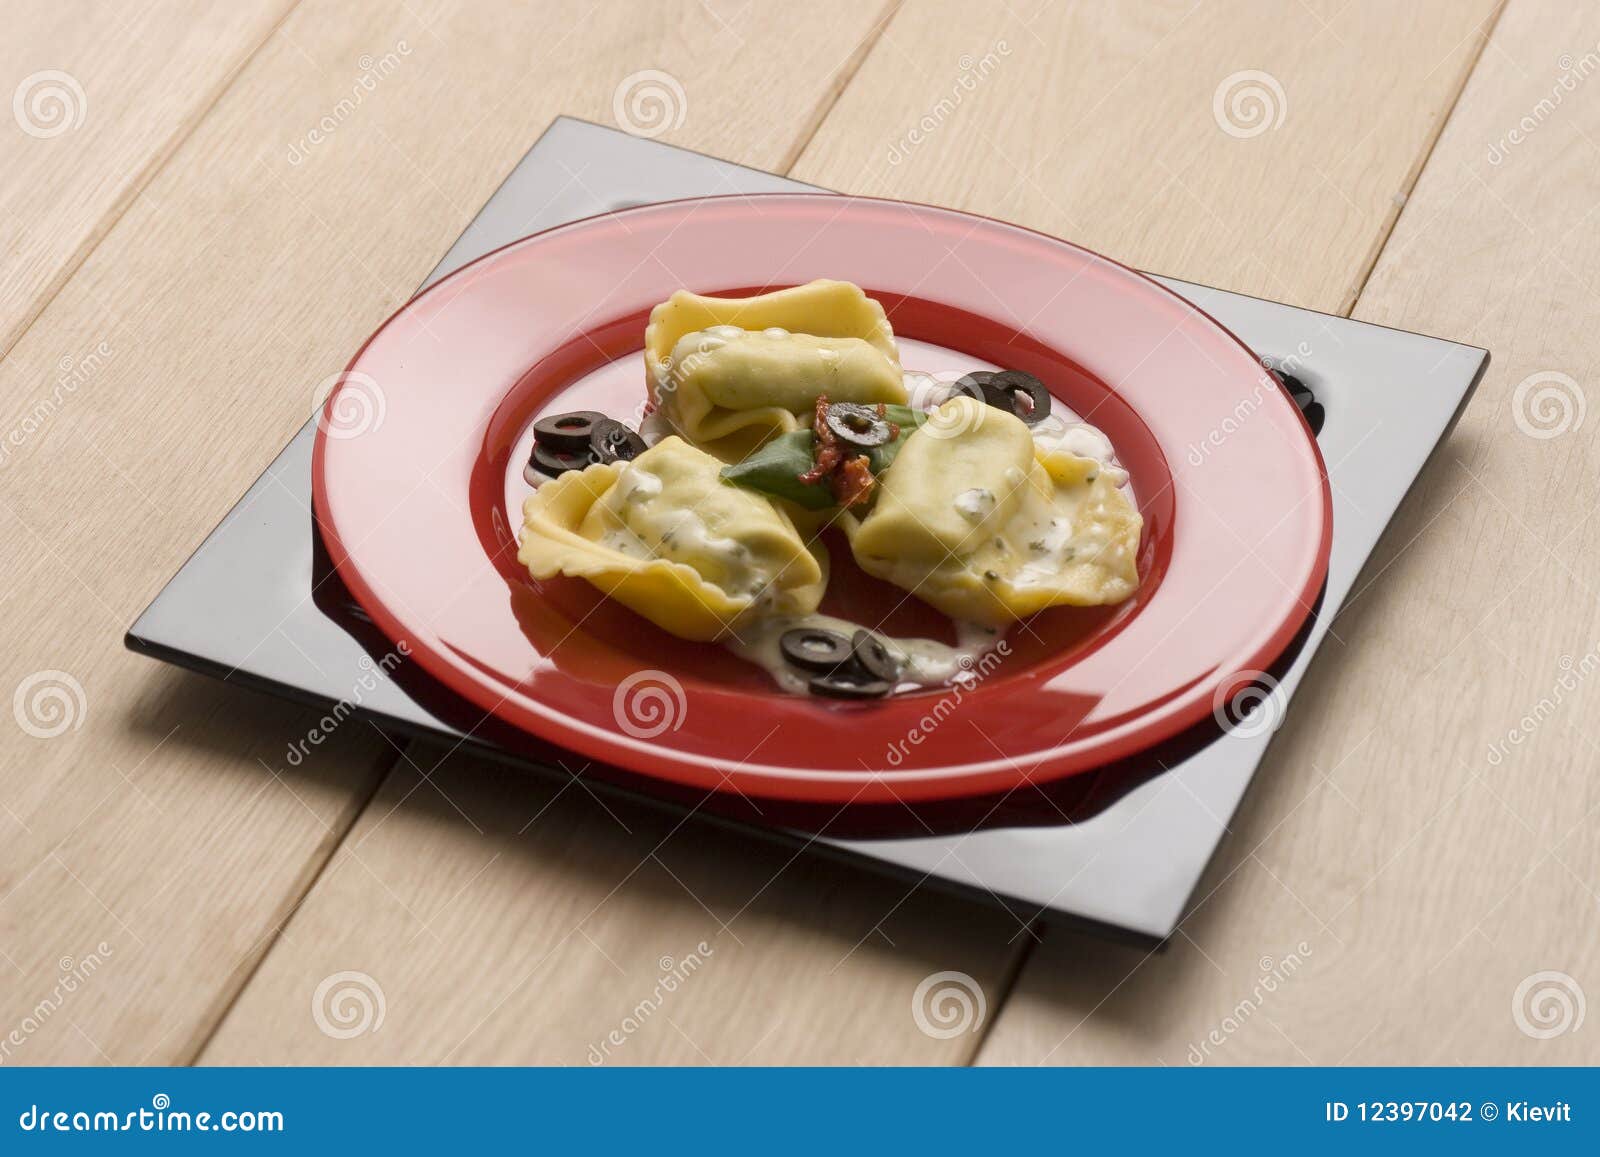 ravioli with olives